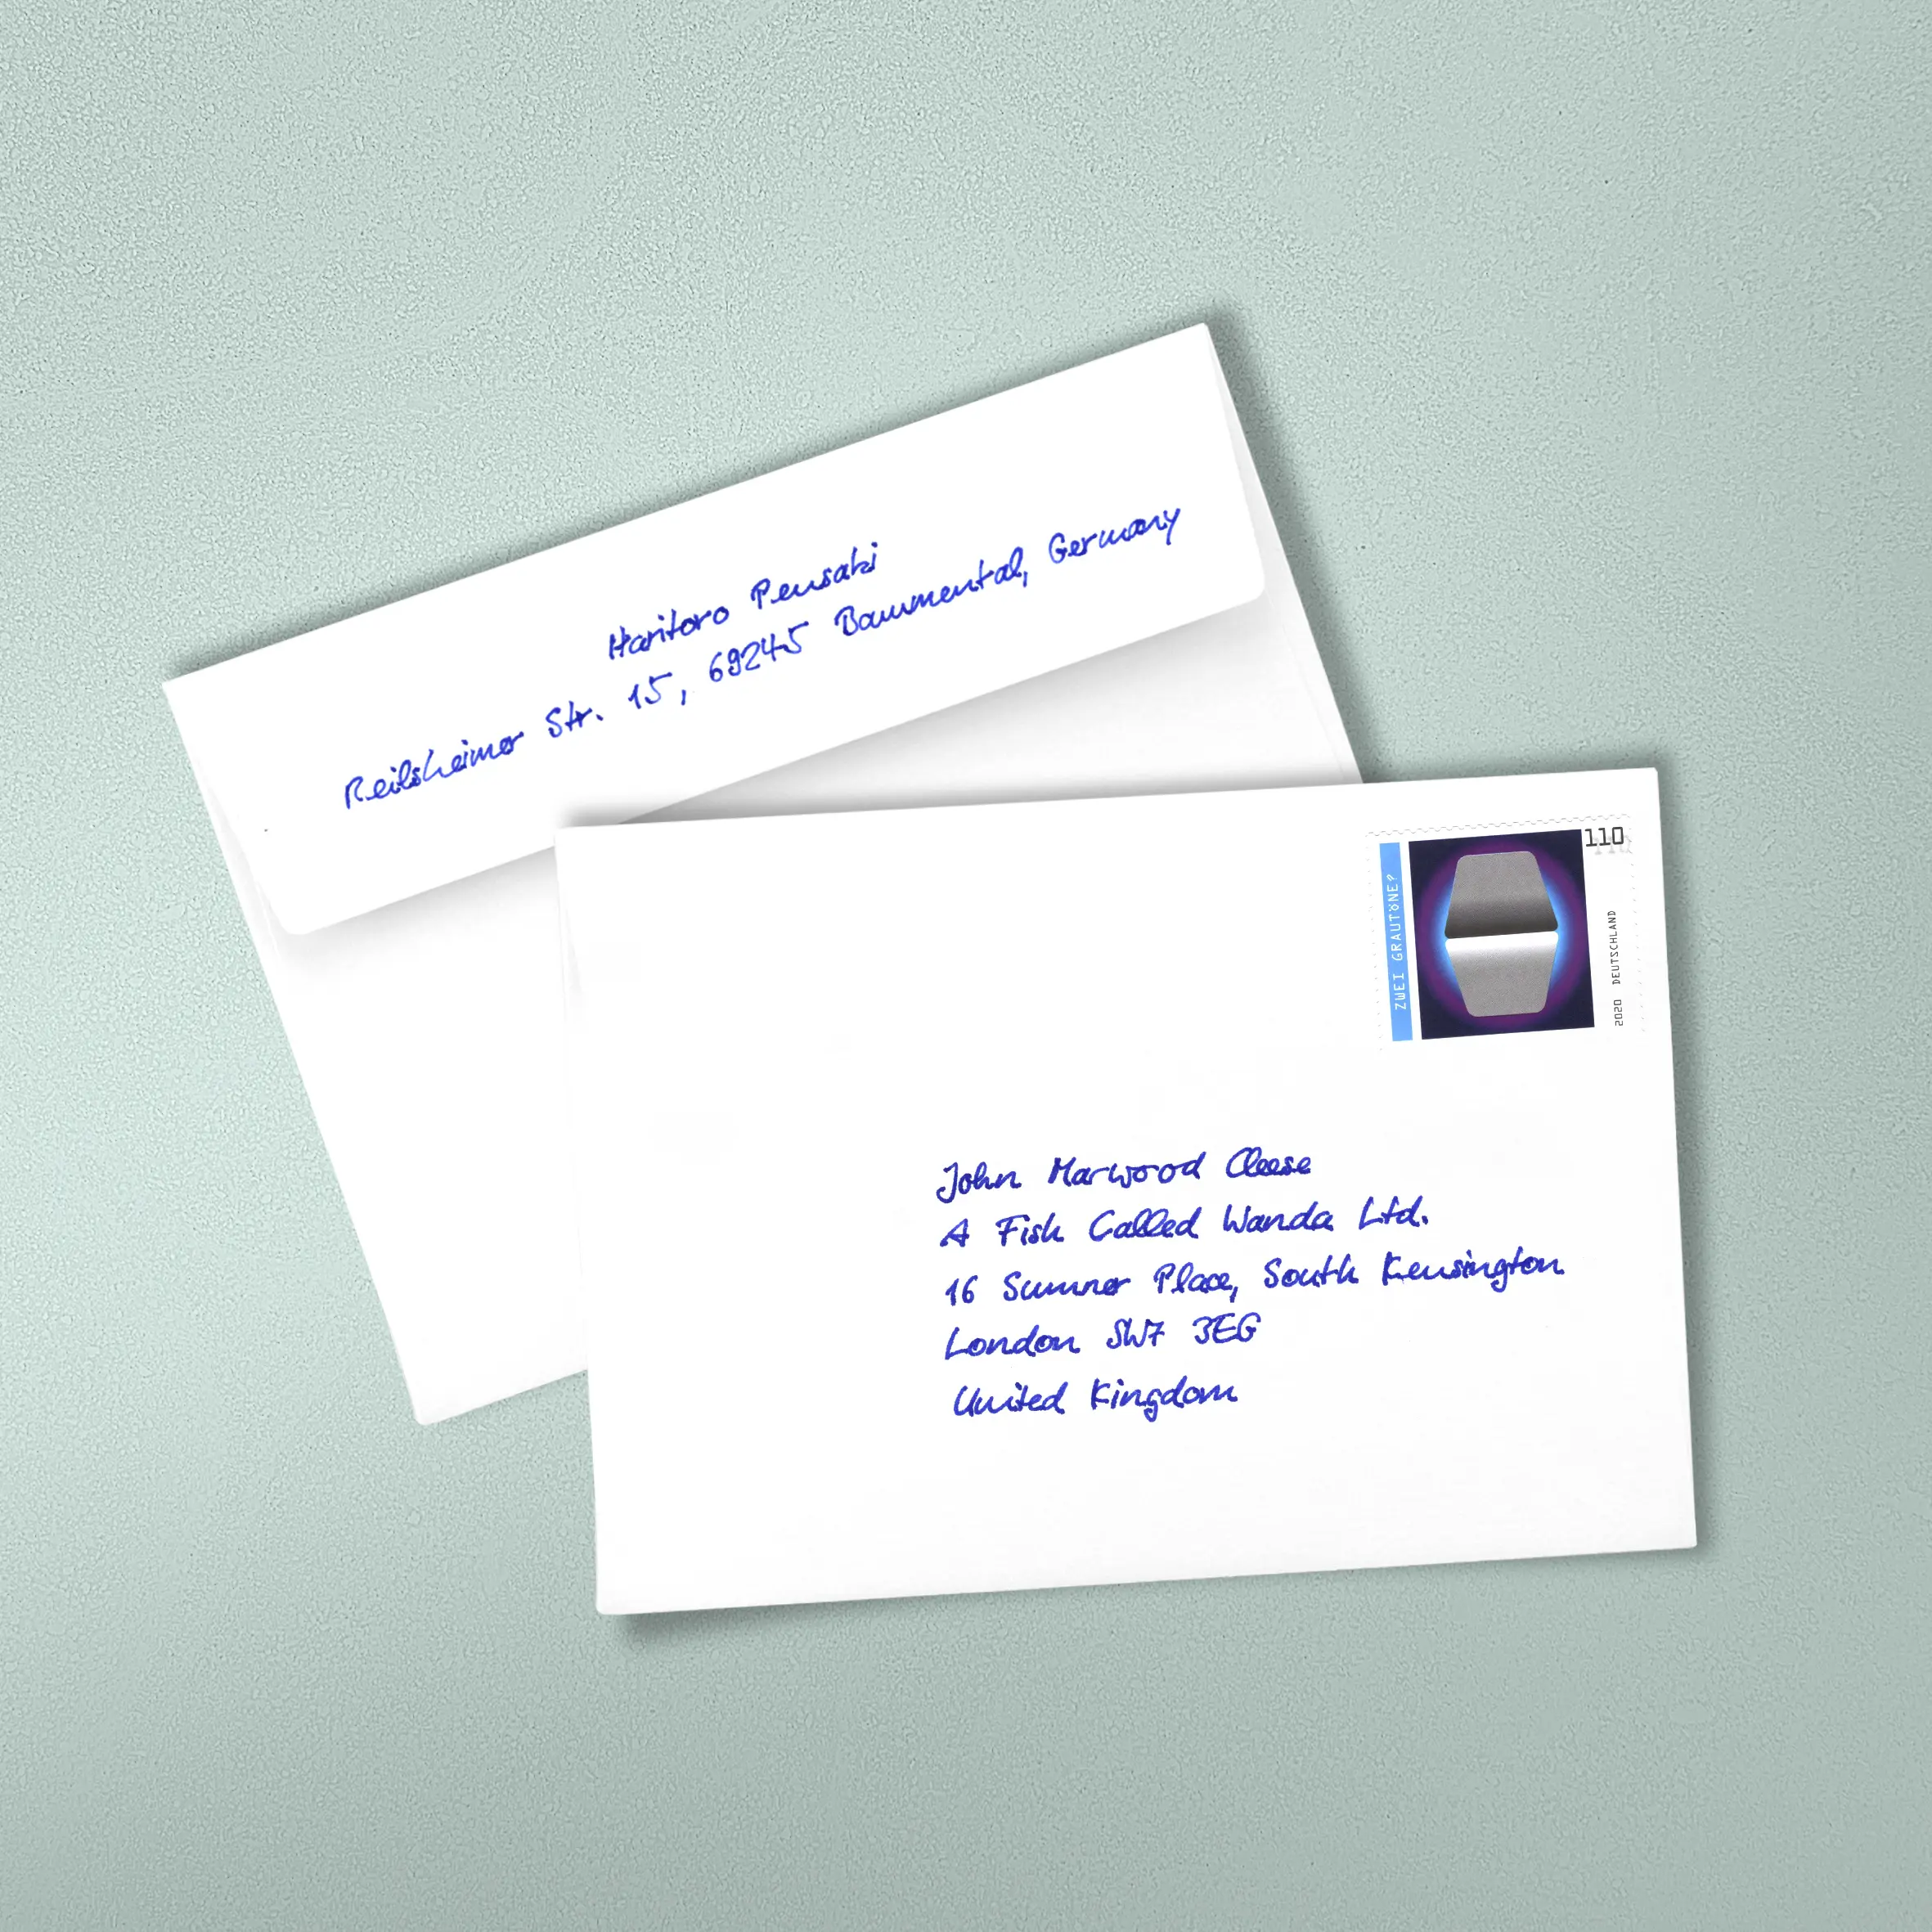 handwritten envelopes incl sender credentials - envelope2S